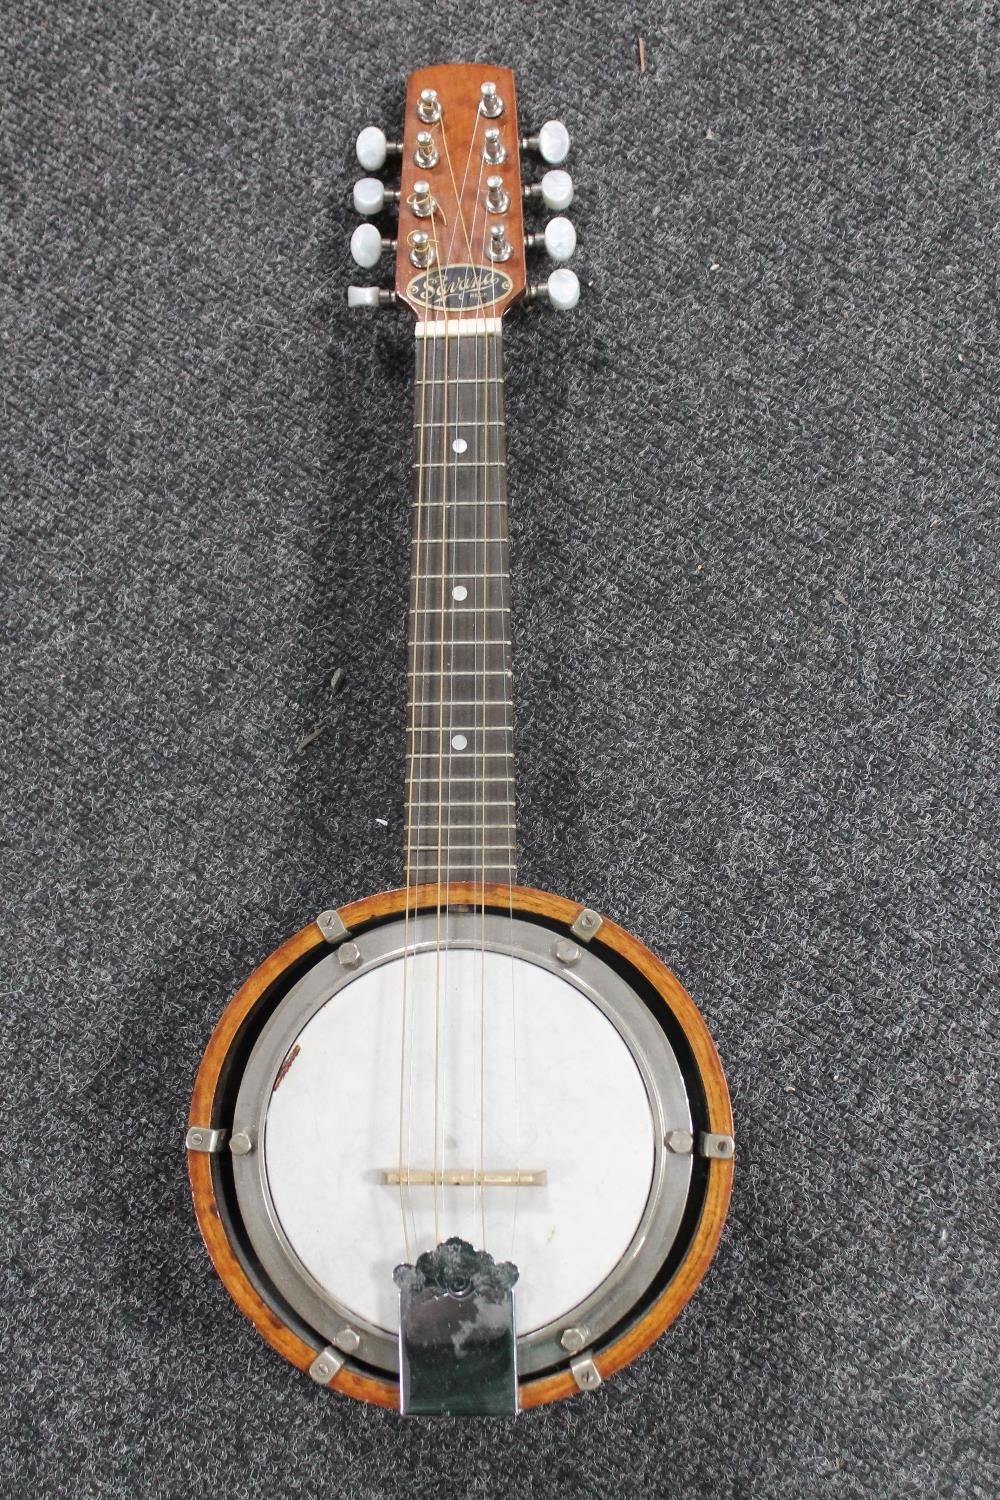 A Savanna eight string mandolin banjo